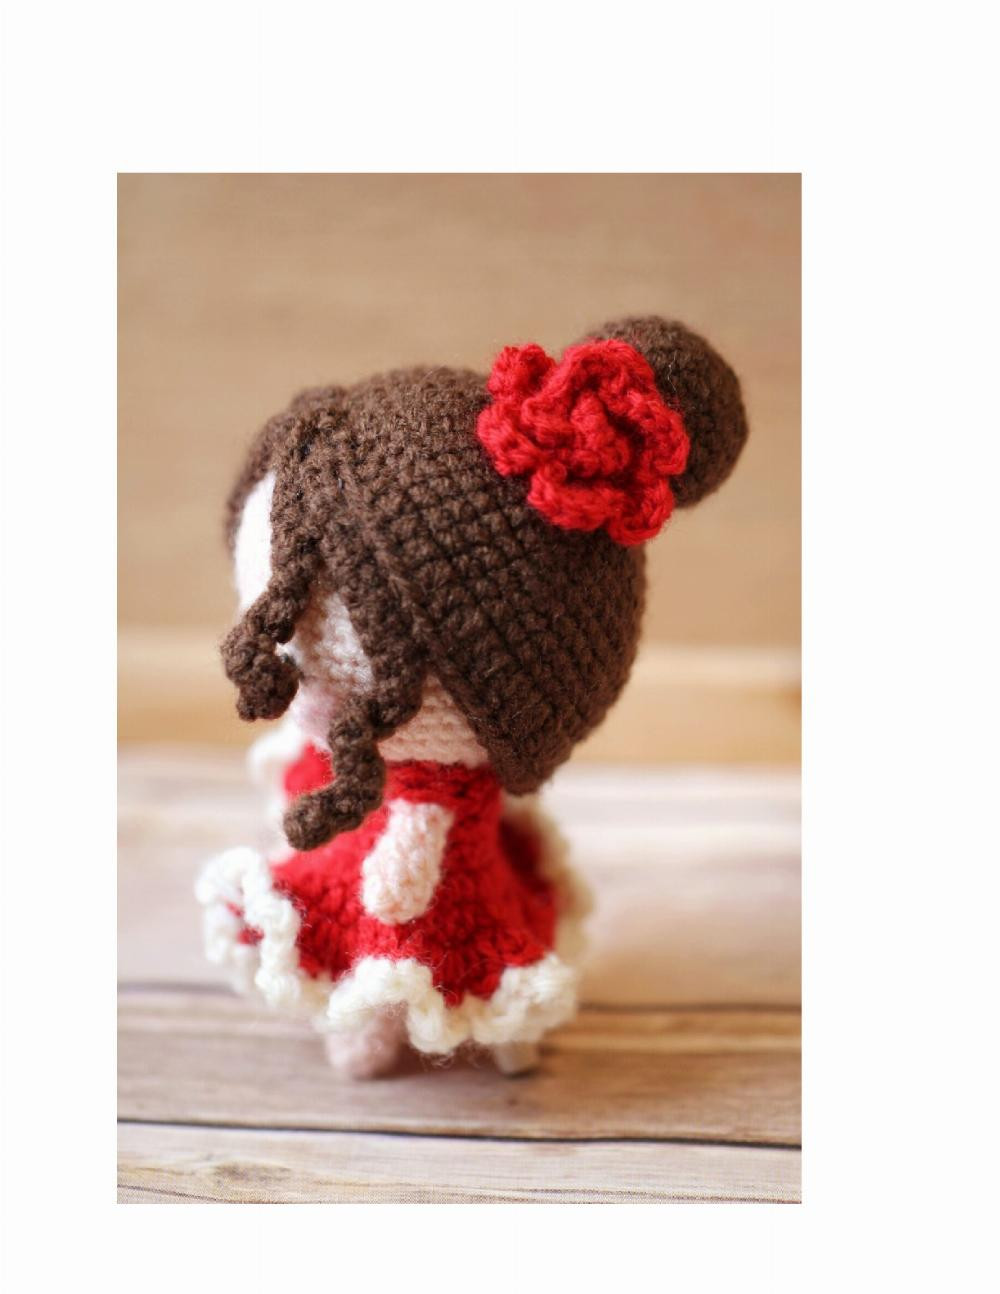 Carmen the Mini Doll crochet pattern